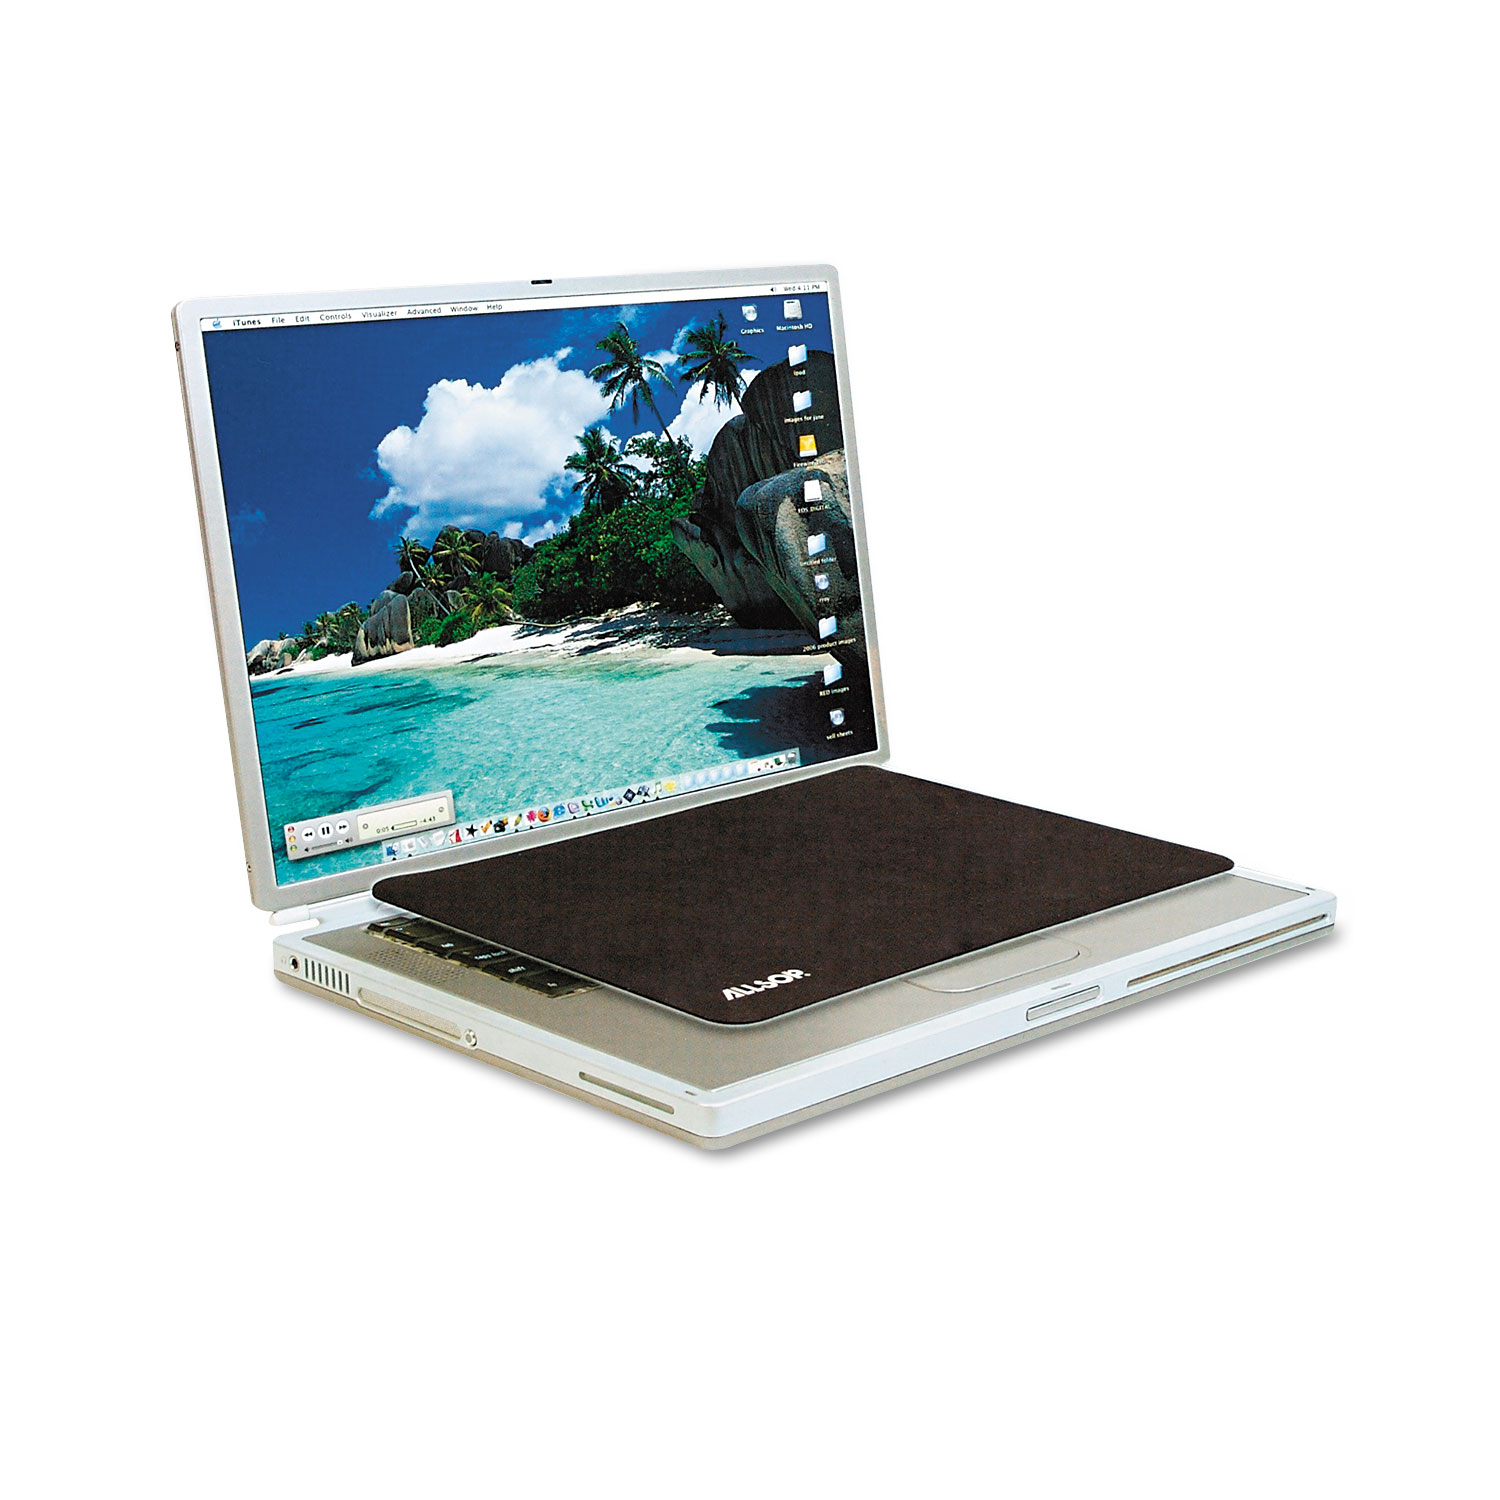  Allsop 29592 Travel Notebook Optical Mouse Pad, Nonskid Back, 11 x 7 1/4, Black (ASP29592) 